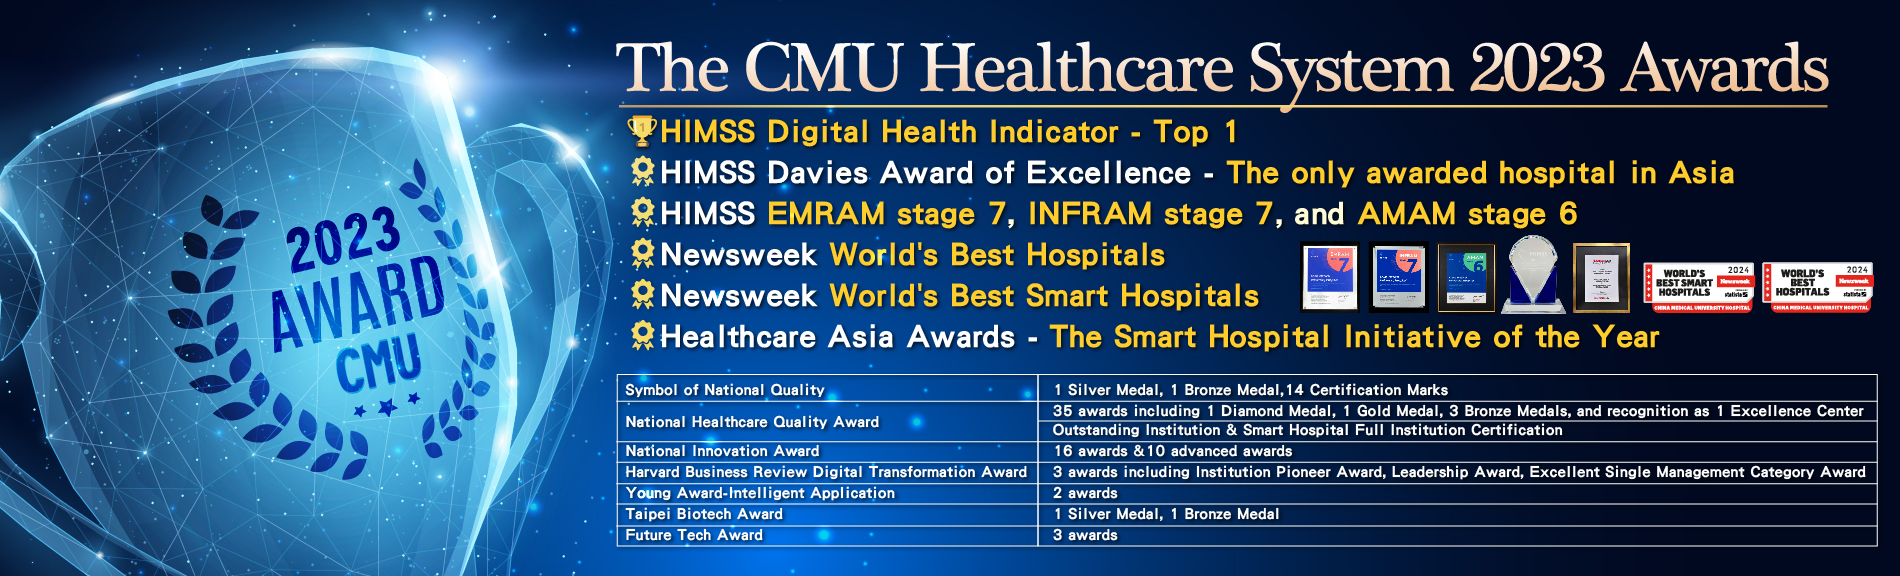 The CMU Healthcare System 2023 Awards